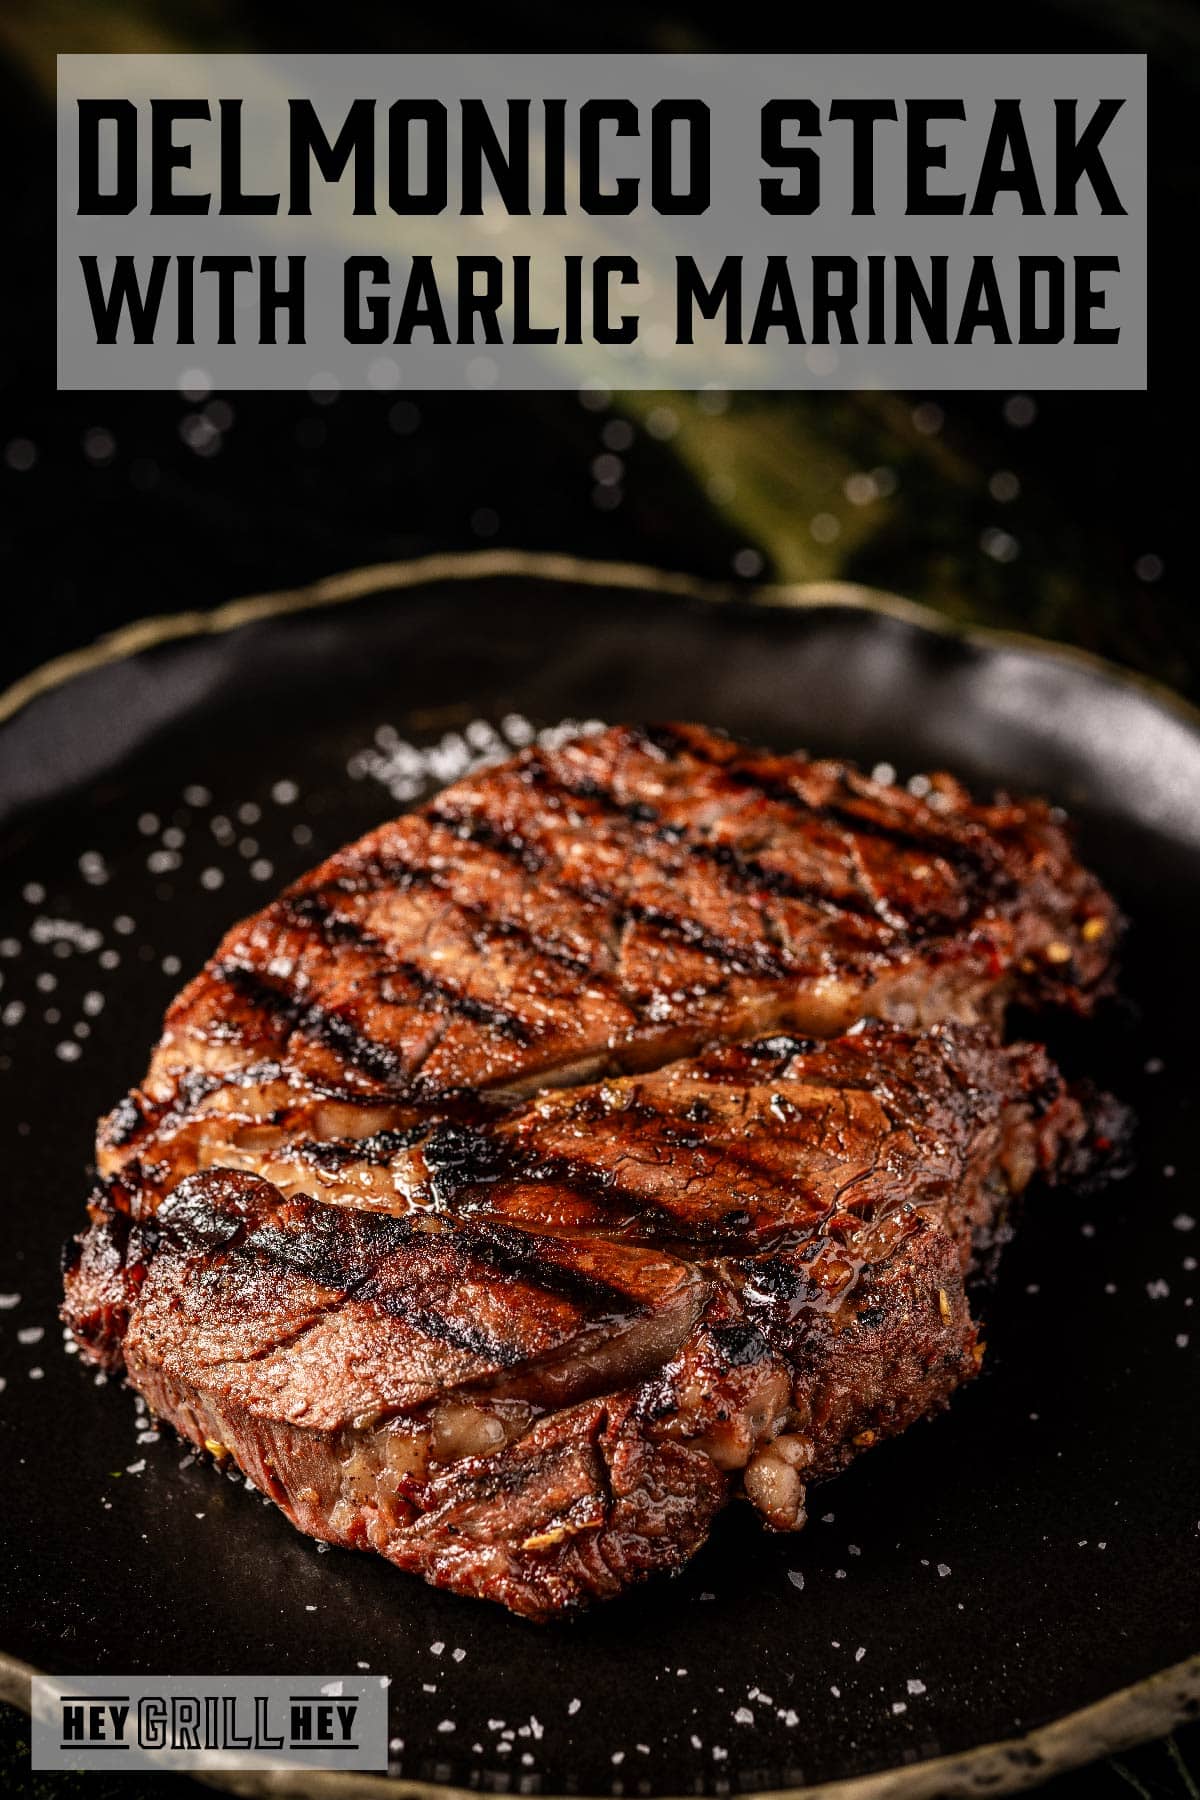 Seared steak on black plate. Text reads "Delmonico Steak with Garlic Marinade".